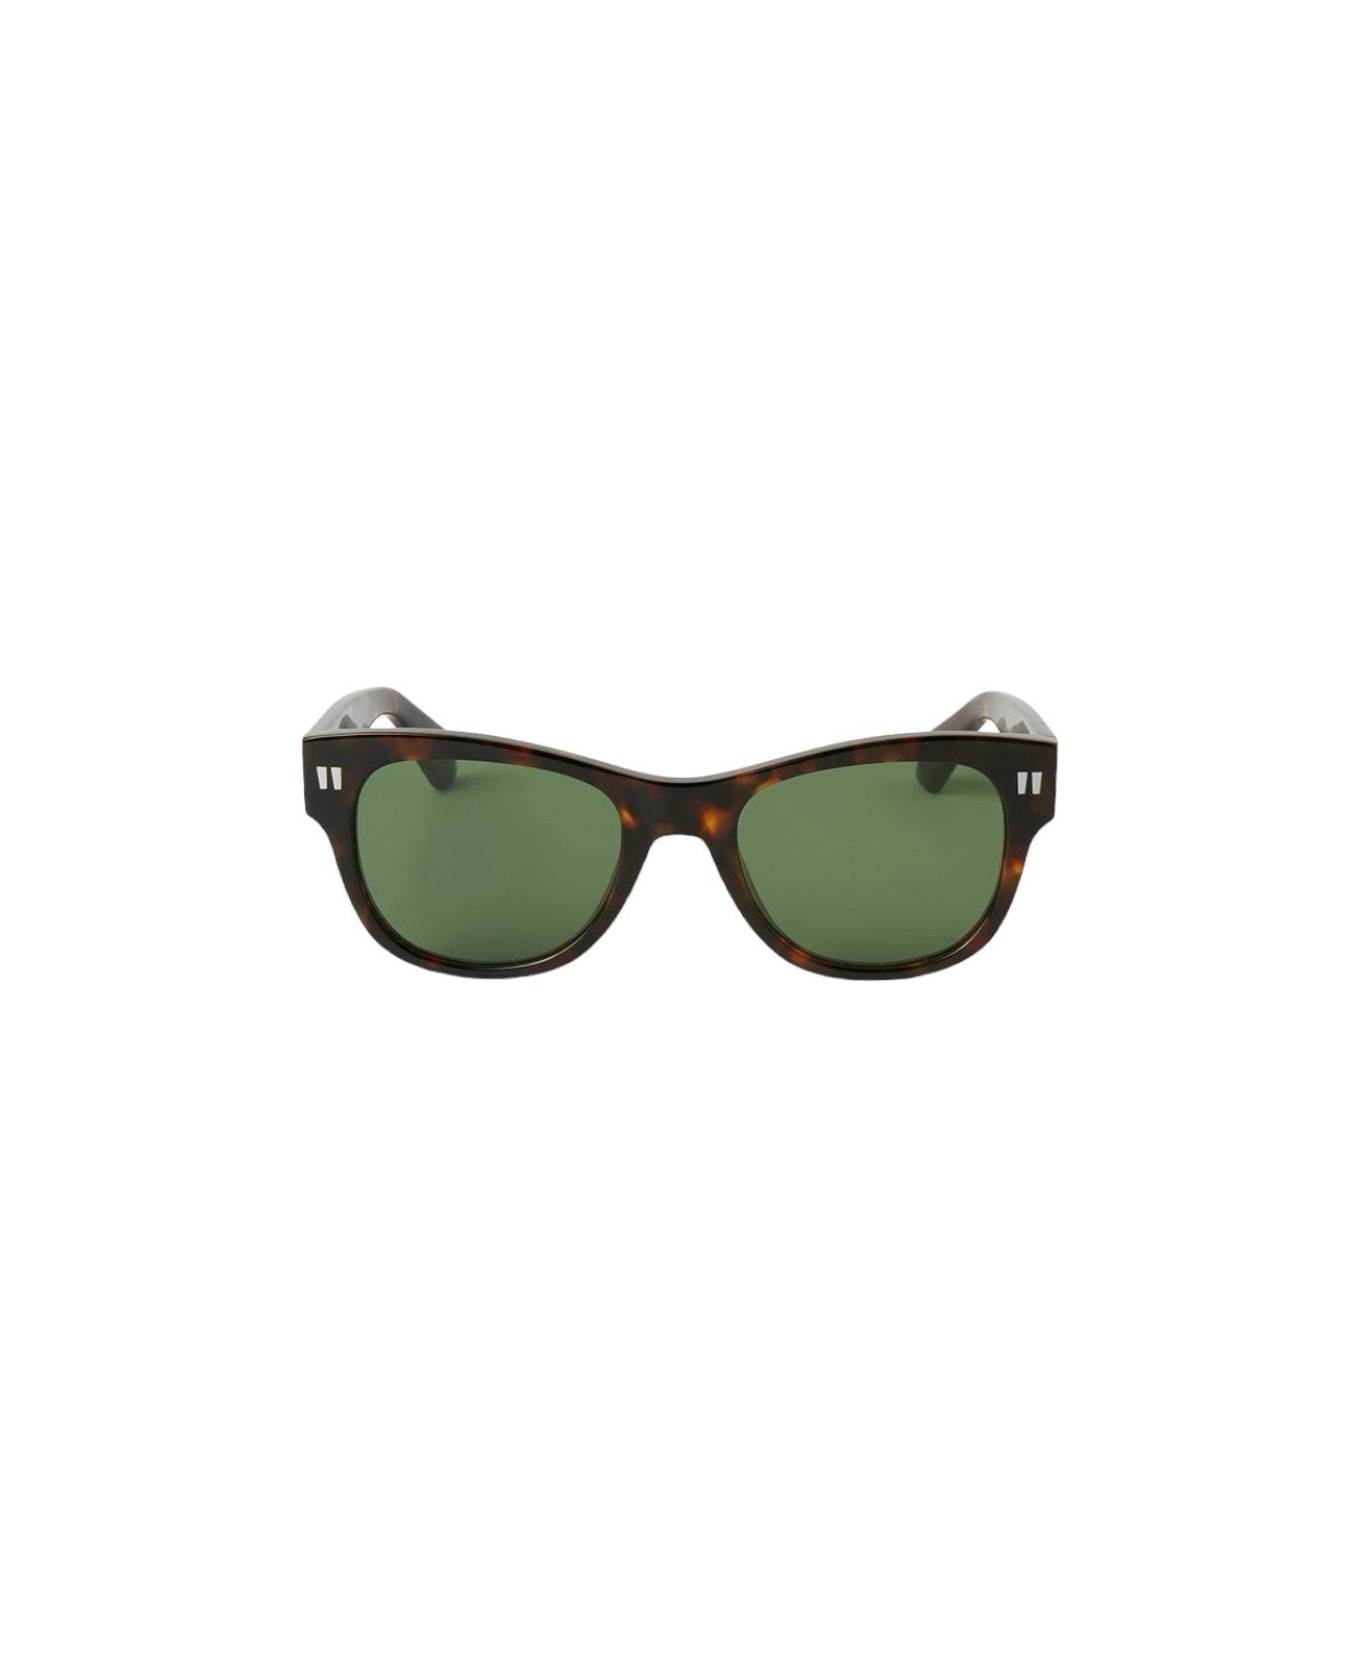 Off-White Moab - Oeri107 Sunglasses